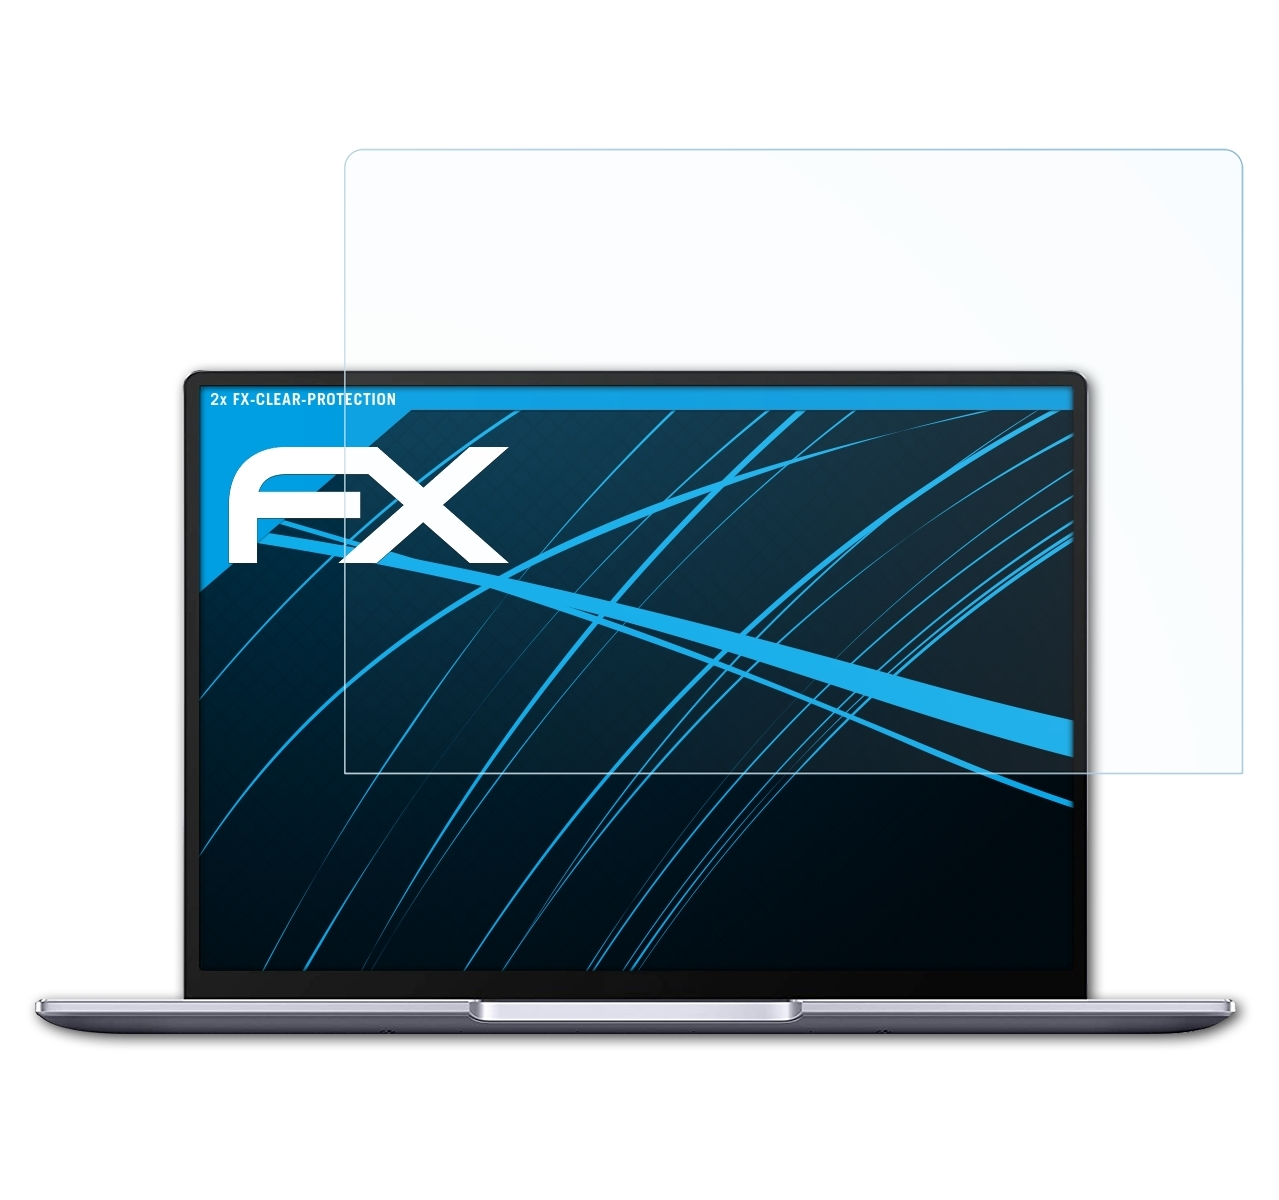 Displayschutz(für FX-Clear MateBook ATFOLIX Huawei (2020)) 2x 14